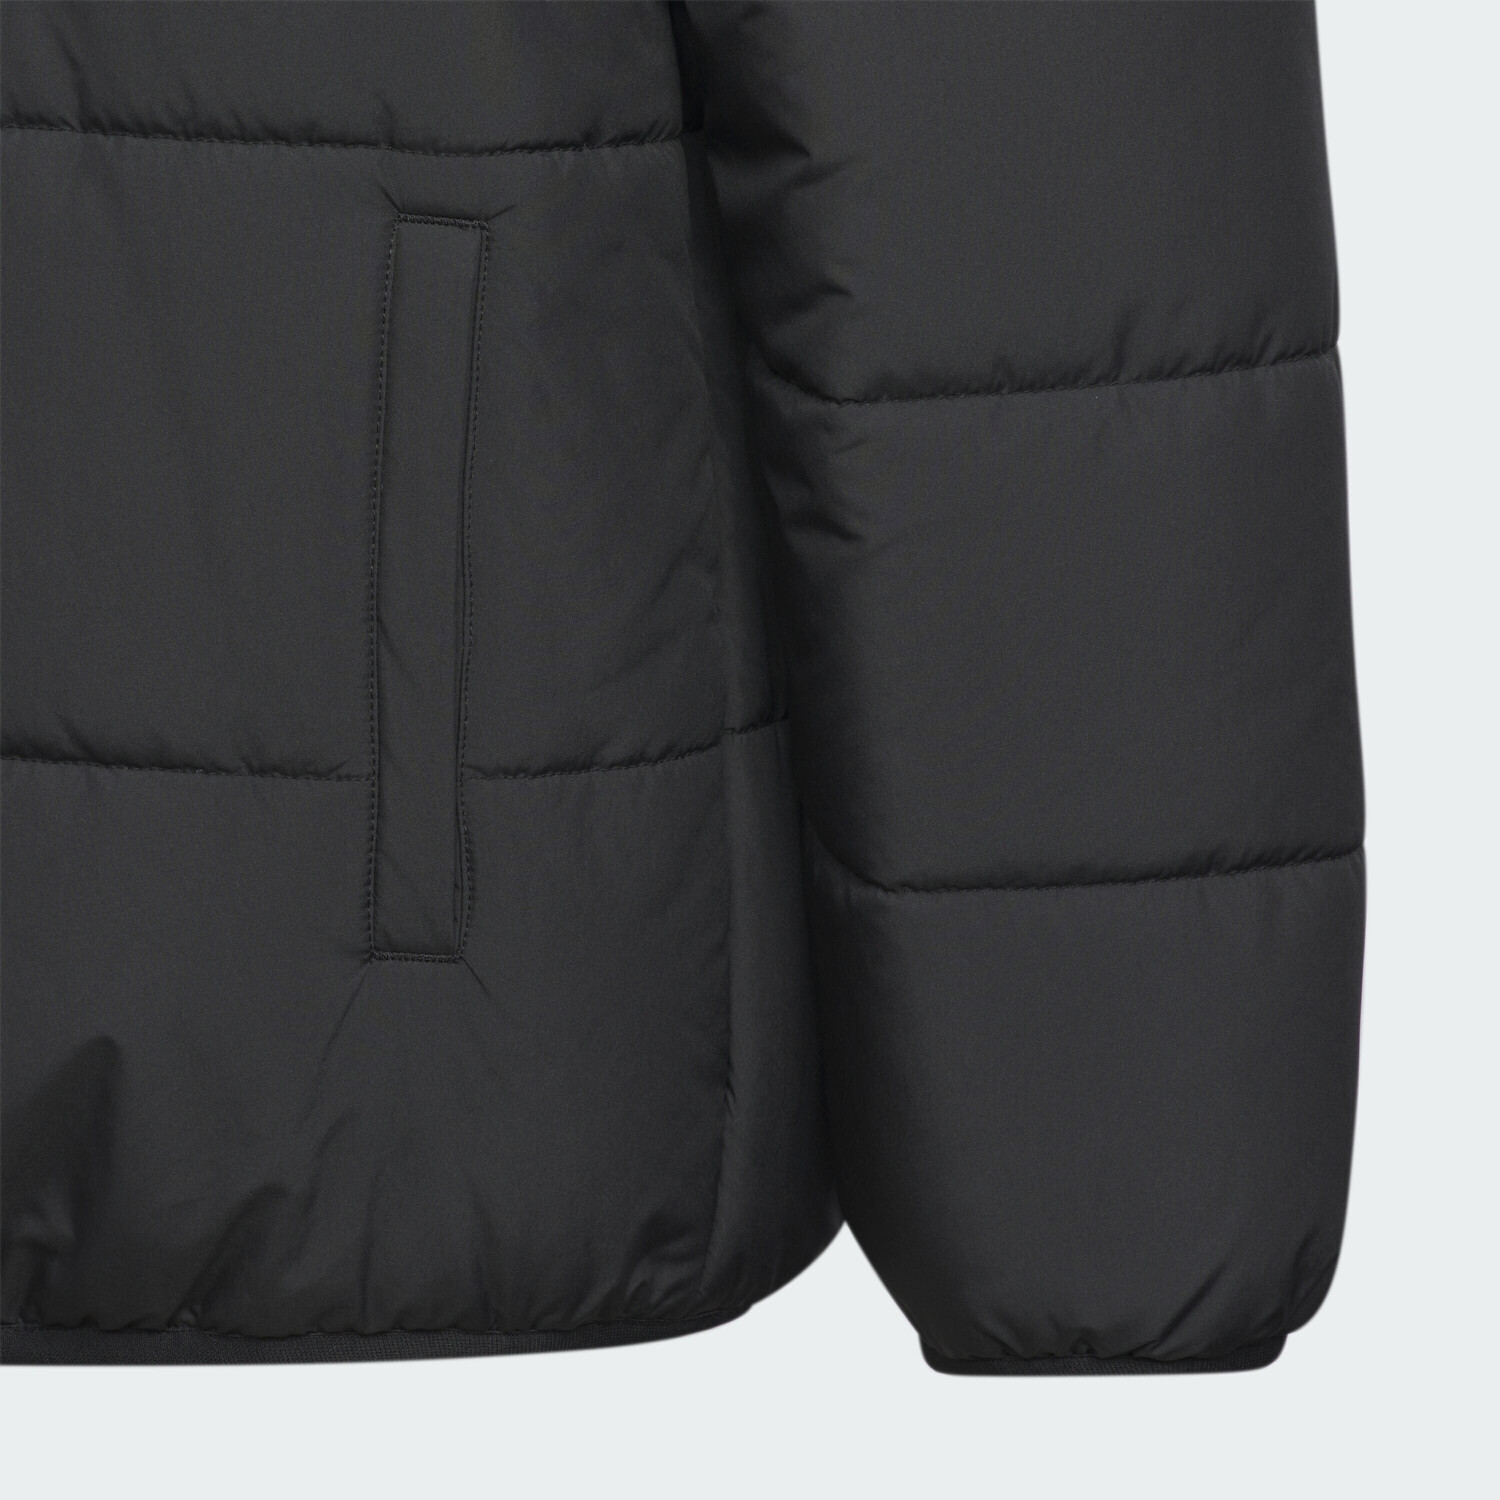 Adidas Padded Kids Jacket black (IL6073) ab 50,00 € | Preisvergleich bei